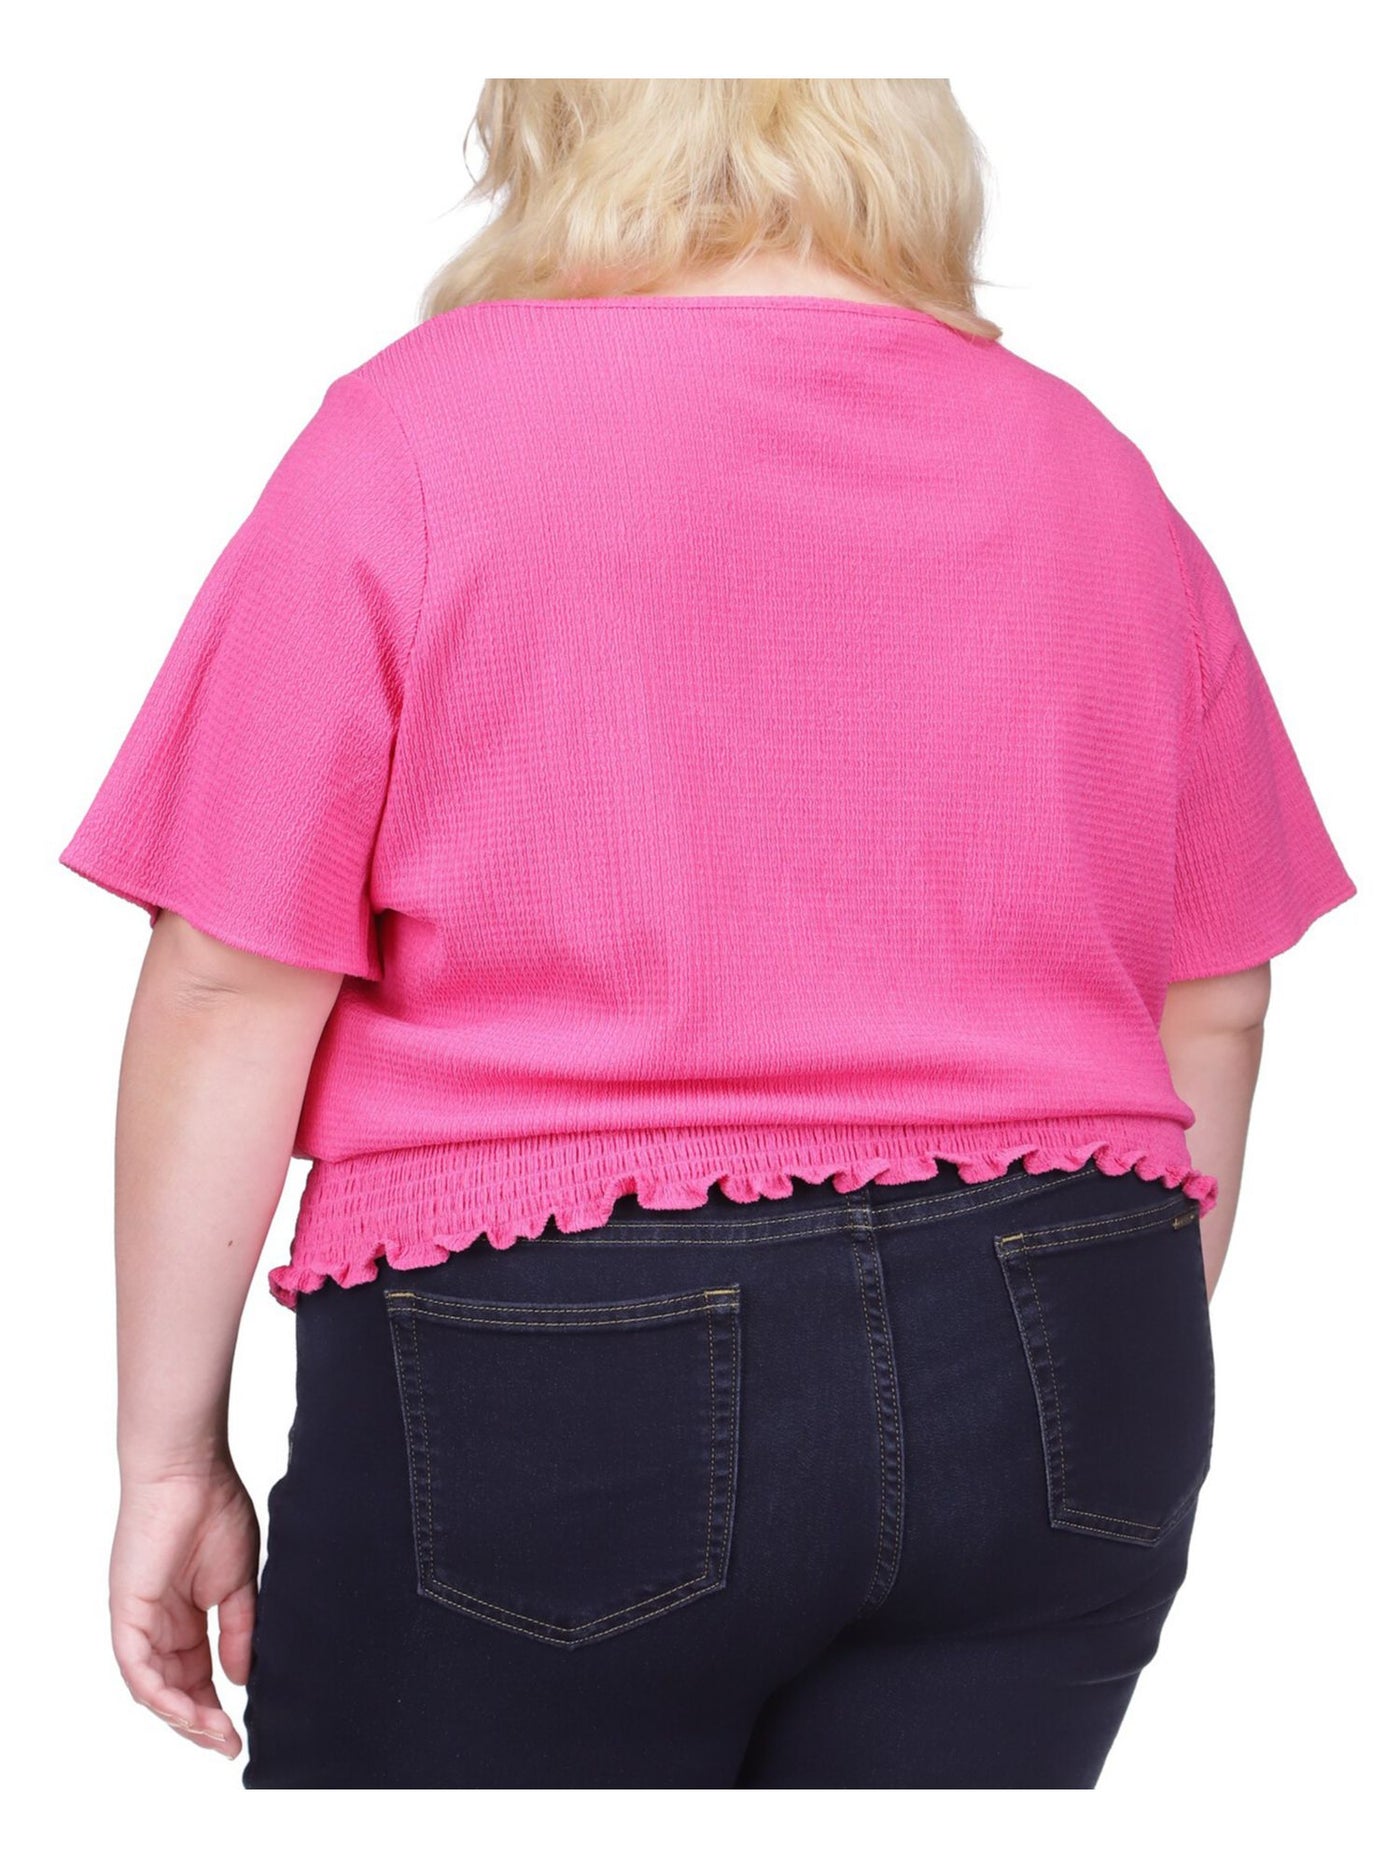 MICHAEL KORS Womens Pink Smocked Textured Flutter Sleeve Crew Neck Top Plus 1X